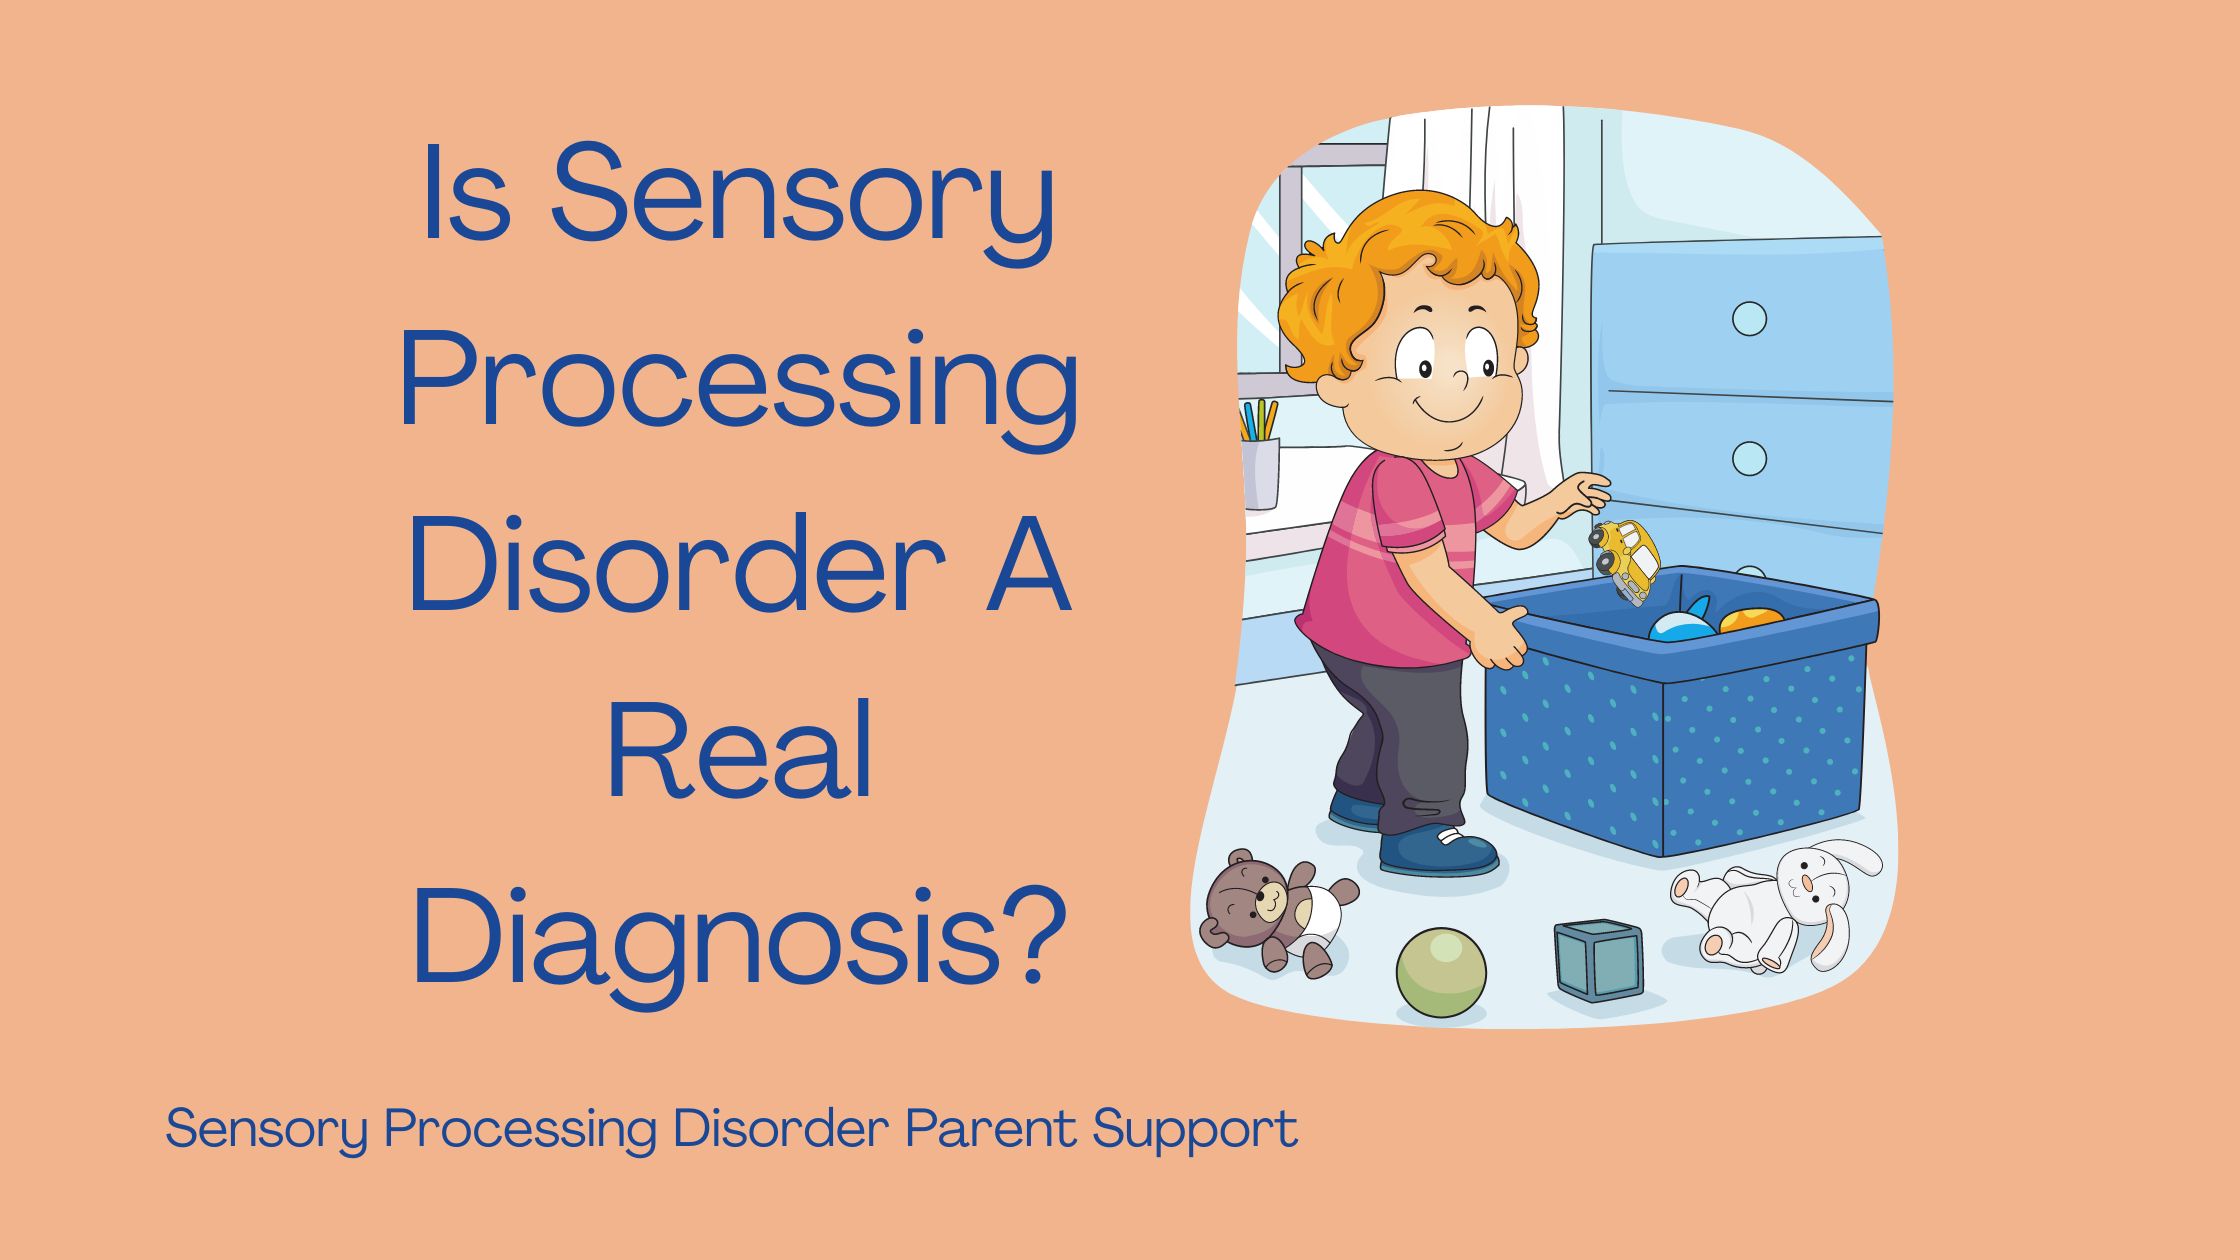 boy with sensory processing disorder playing with sensory toys Is Sensory Processing Disorder A Real Diagnosis?